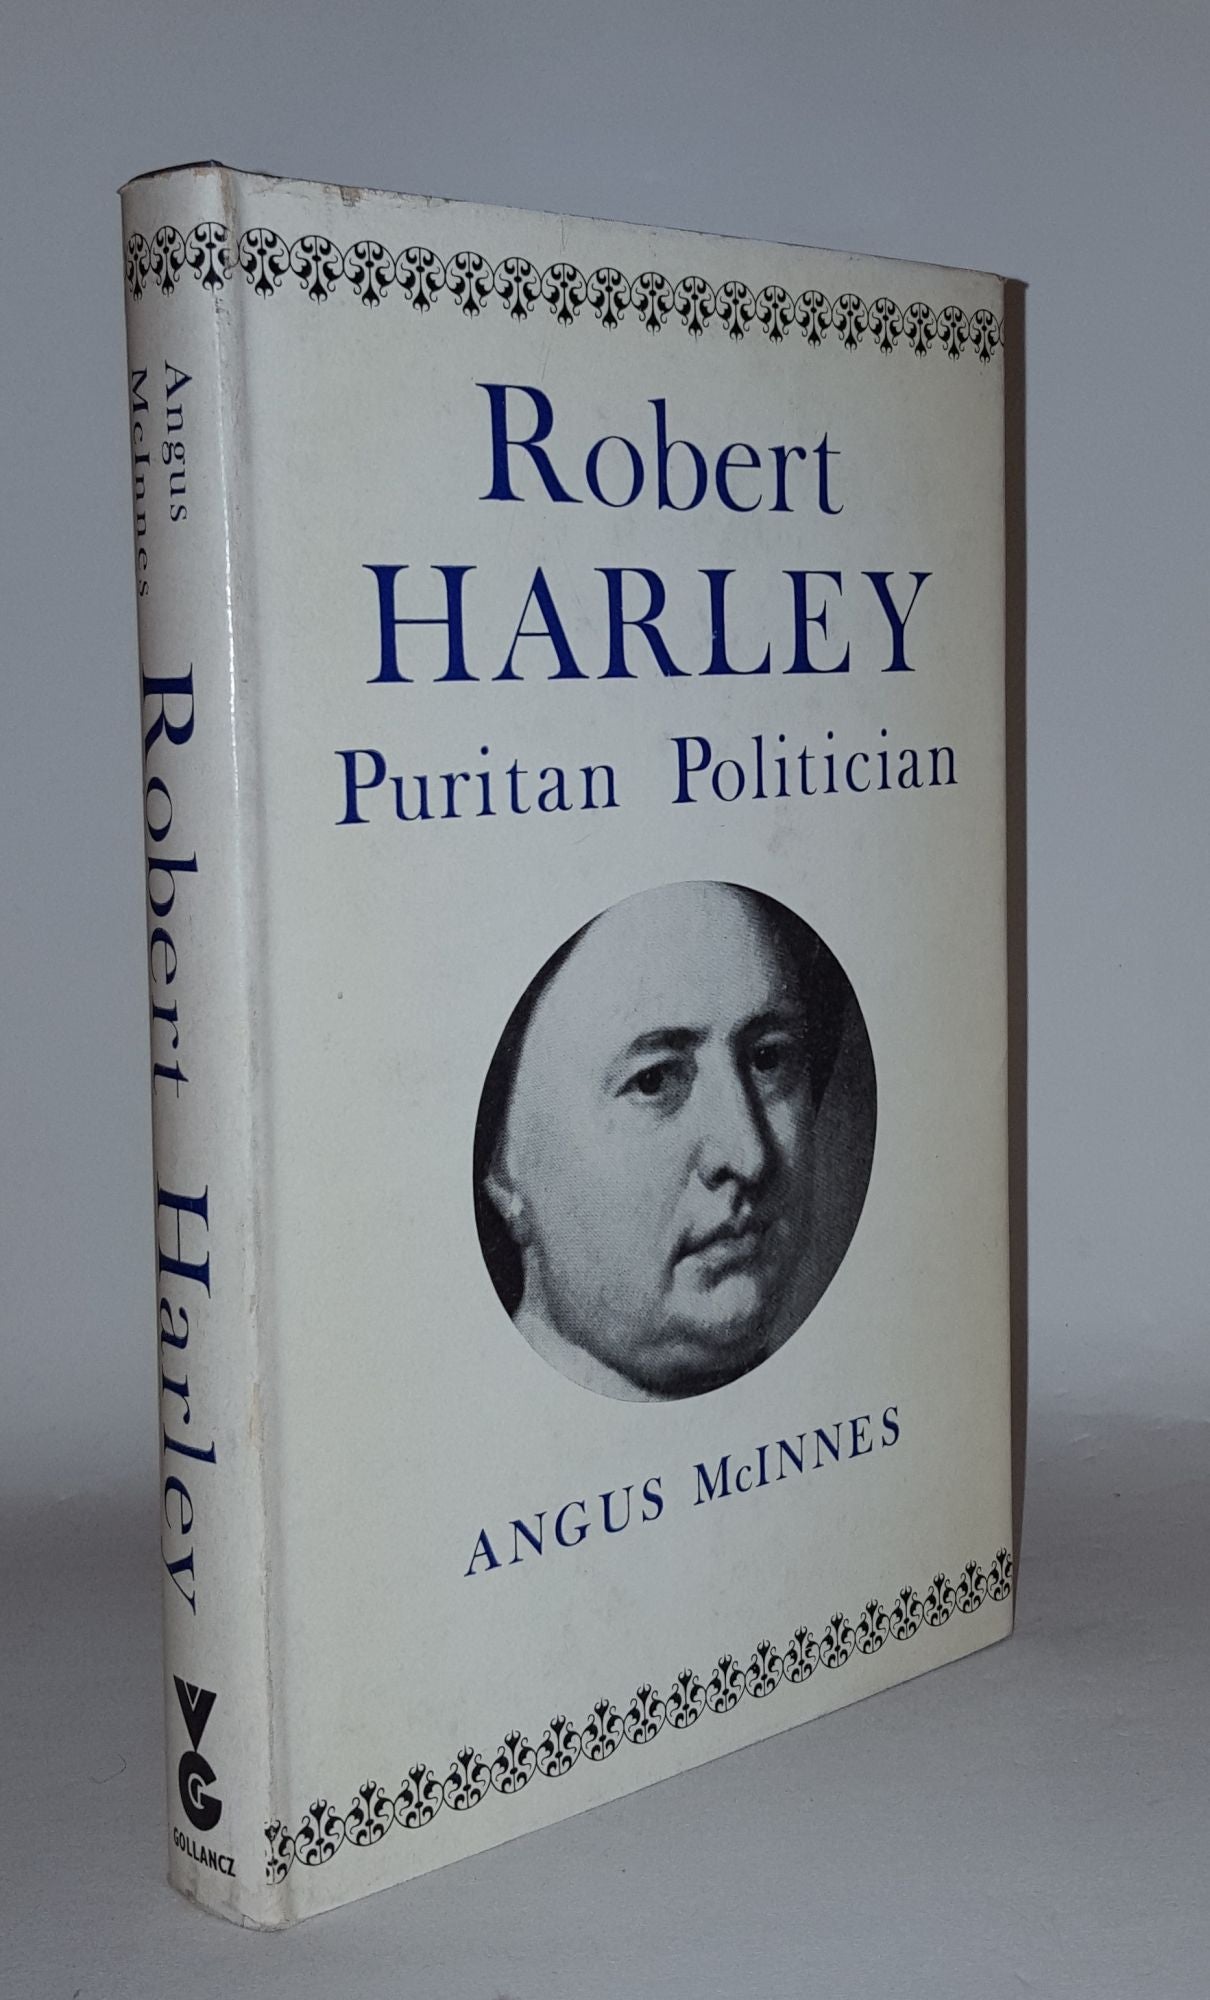 McINNES Angus - Robert Harley Puritan Politician